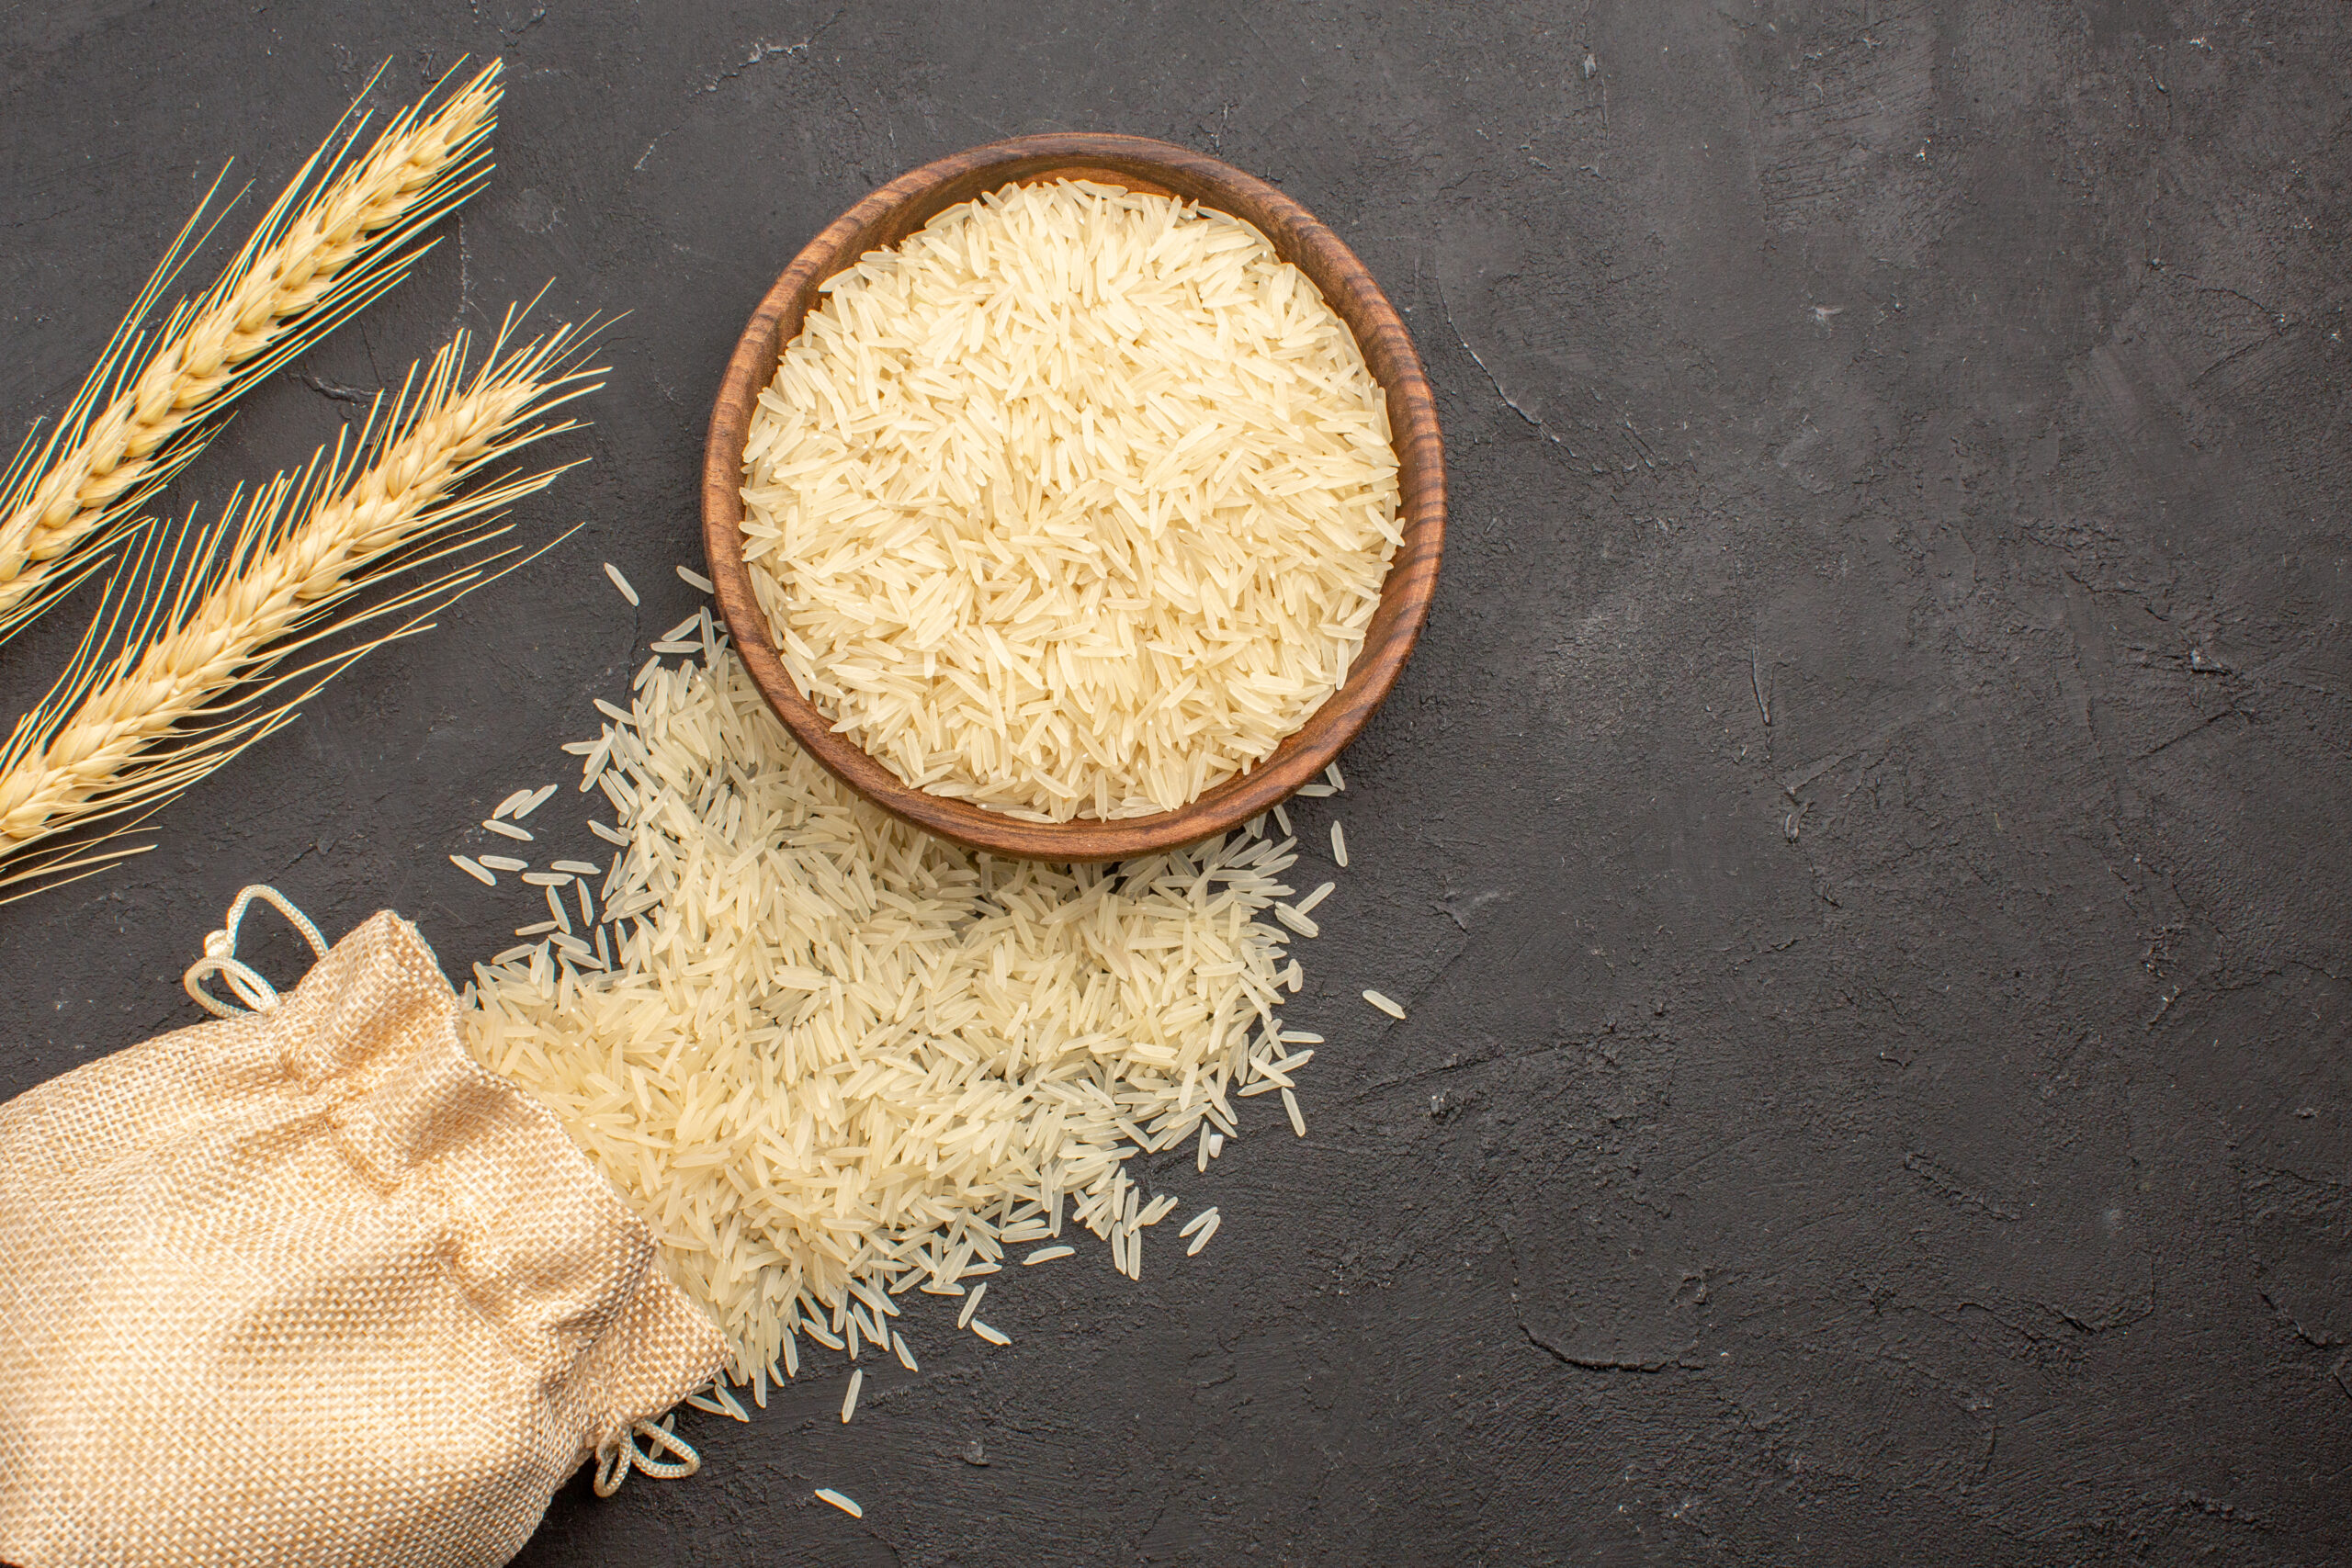 Rice Crop Images